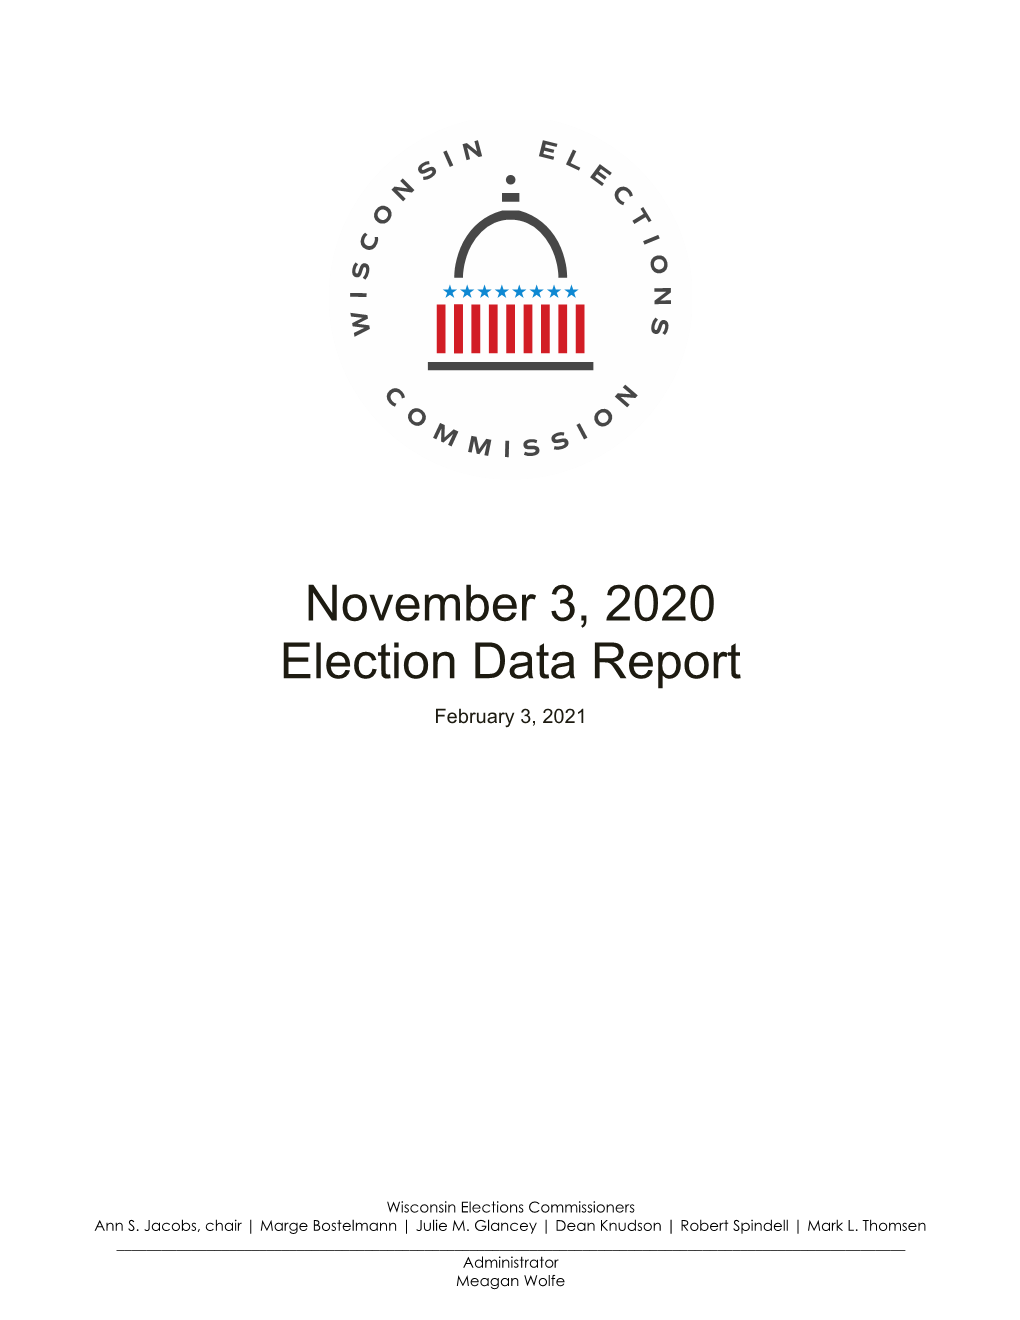 November 3, 2020 Election Data Report February 3, 2021